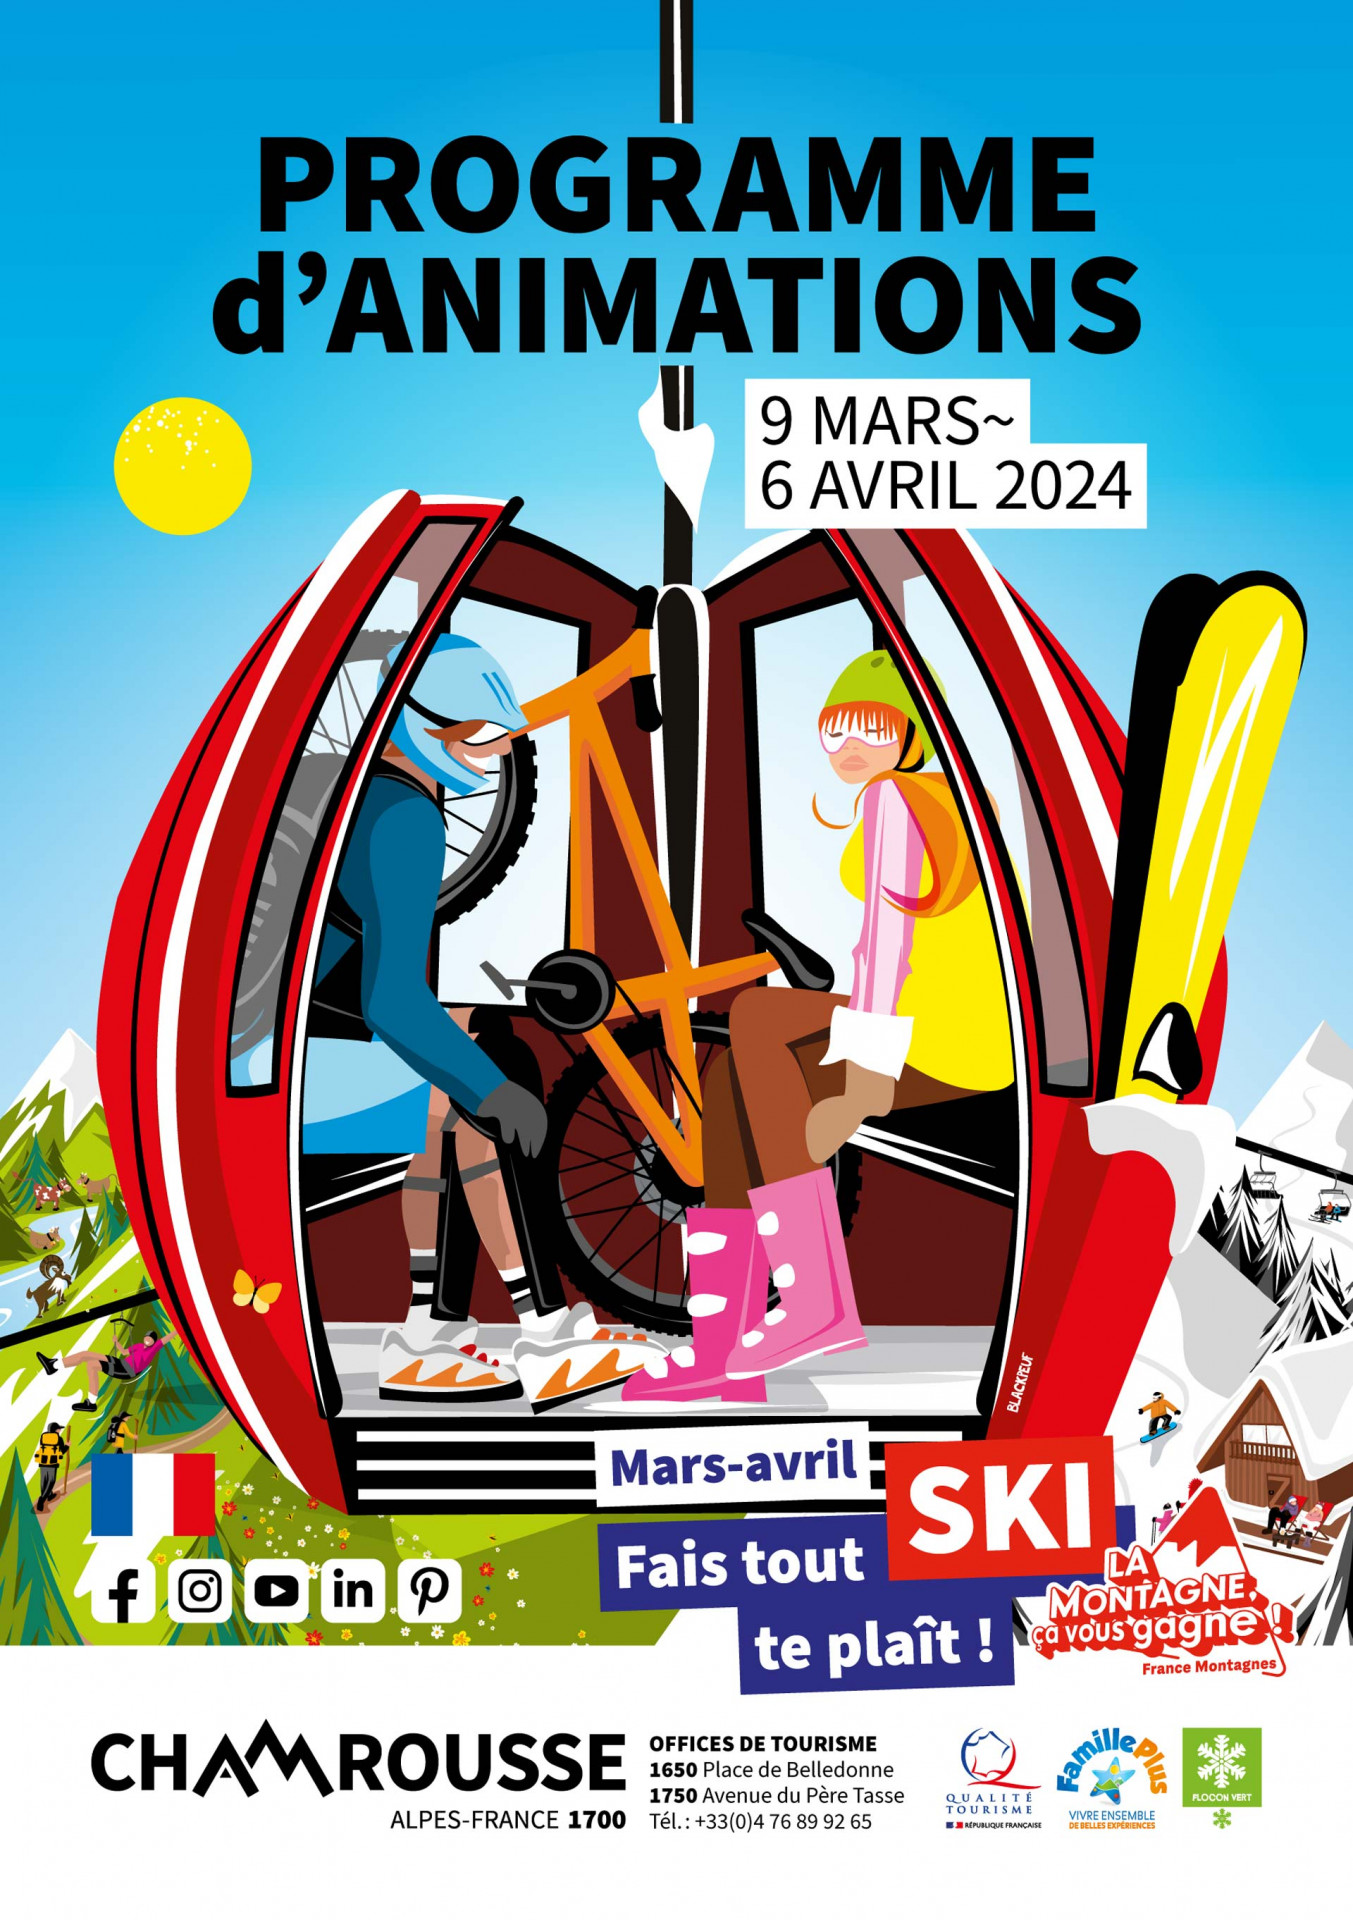 Chamrousse programme animation événement hiver mars avril 2024 station ski montagne grenoble isère alpes france